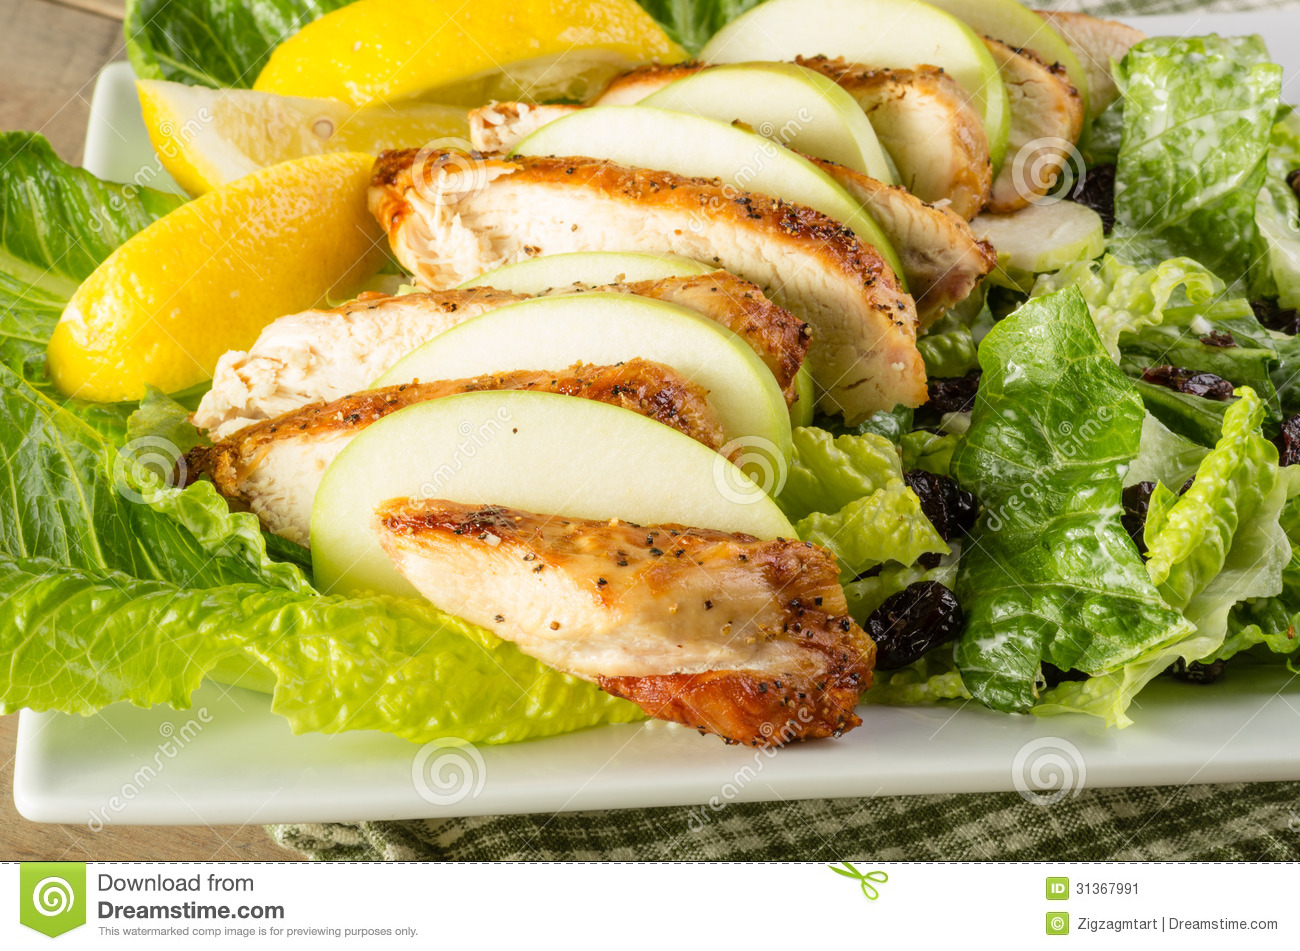 Apple Cranberry Chicken Salad Stock Image   Image  31367991